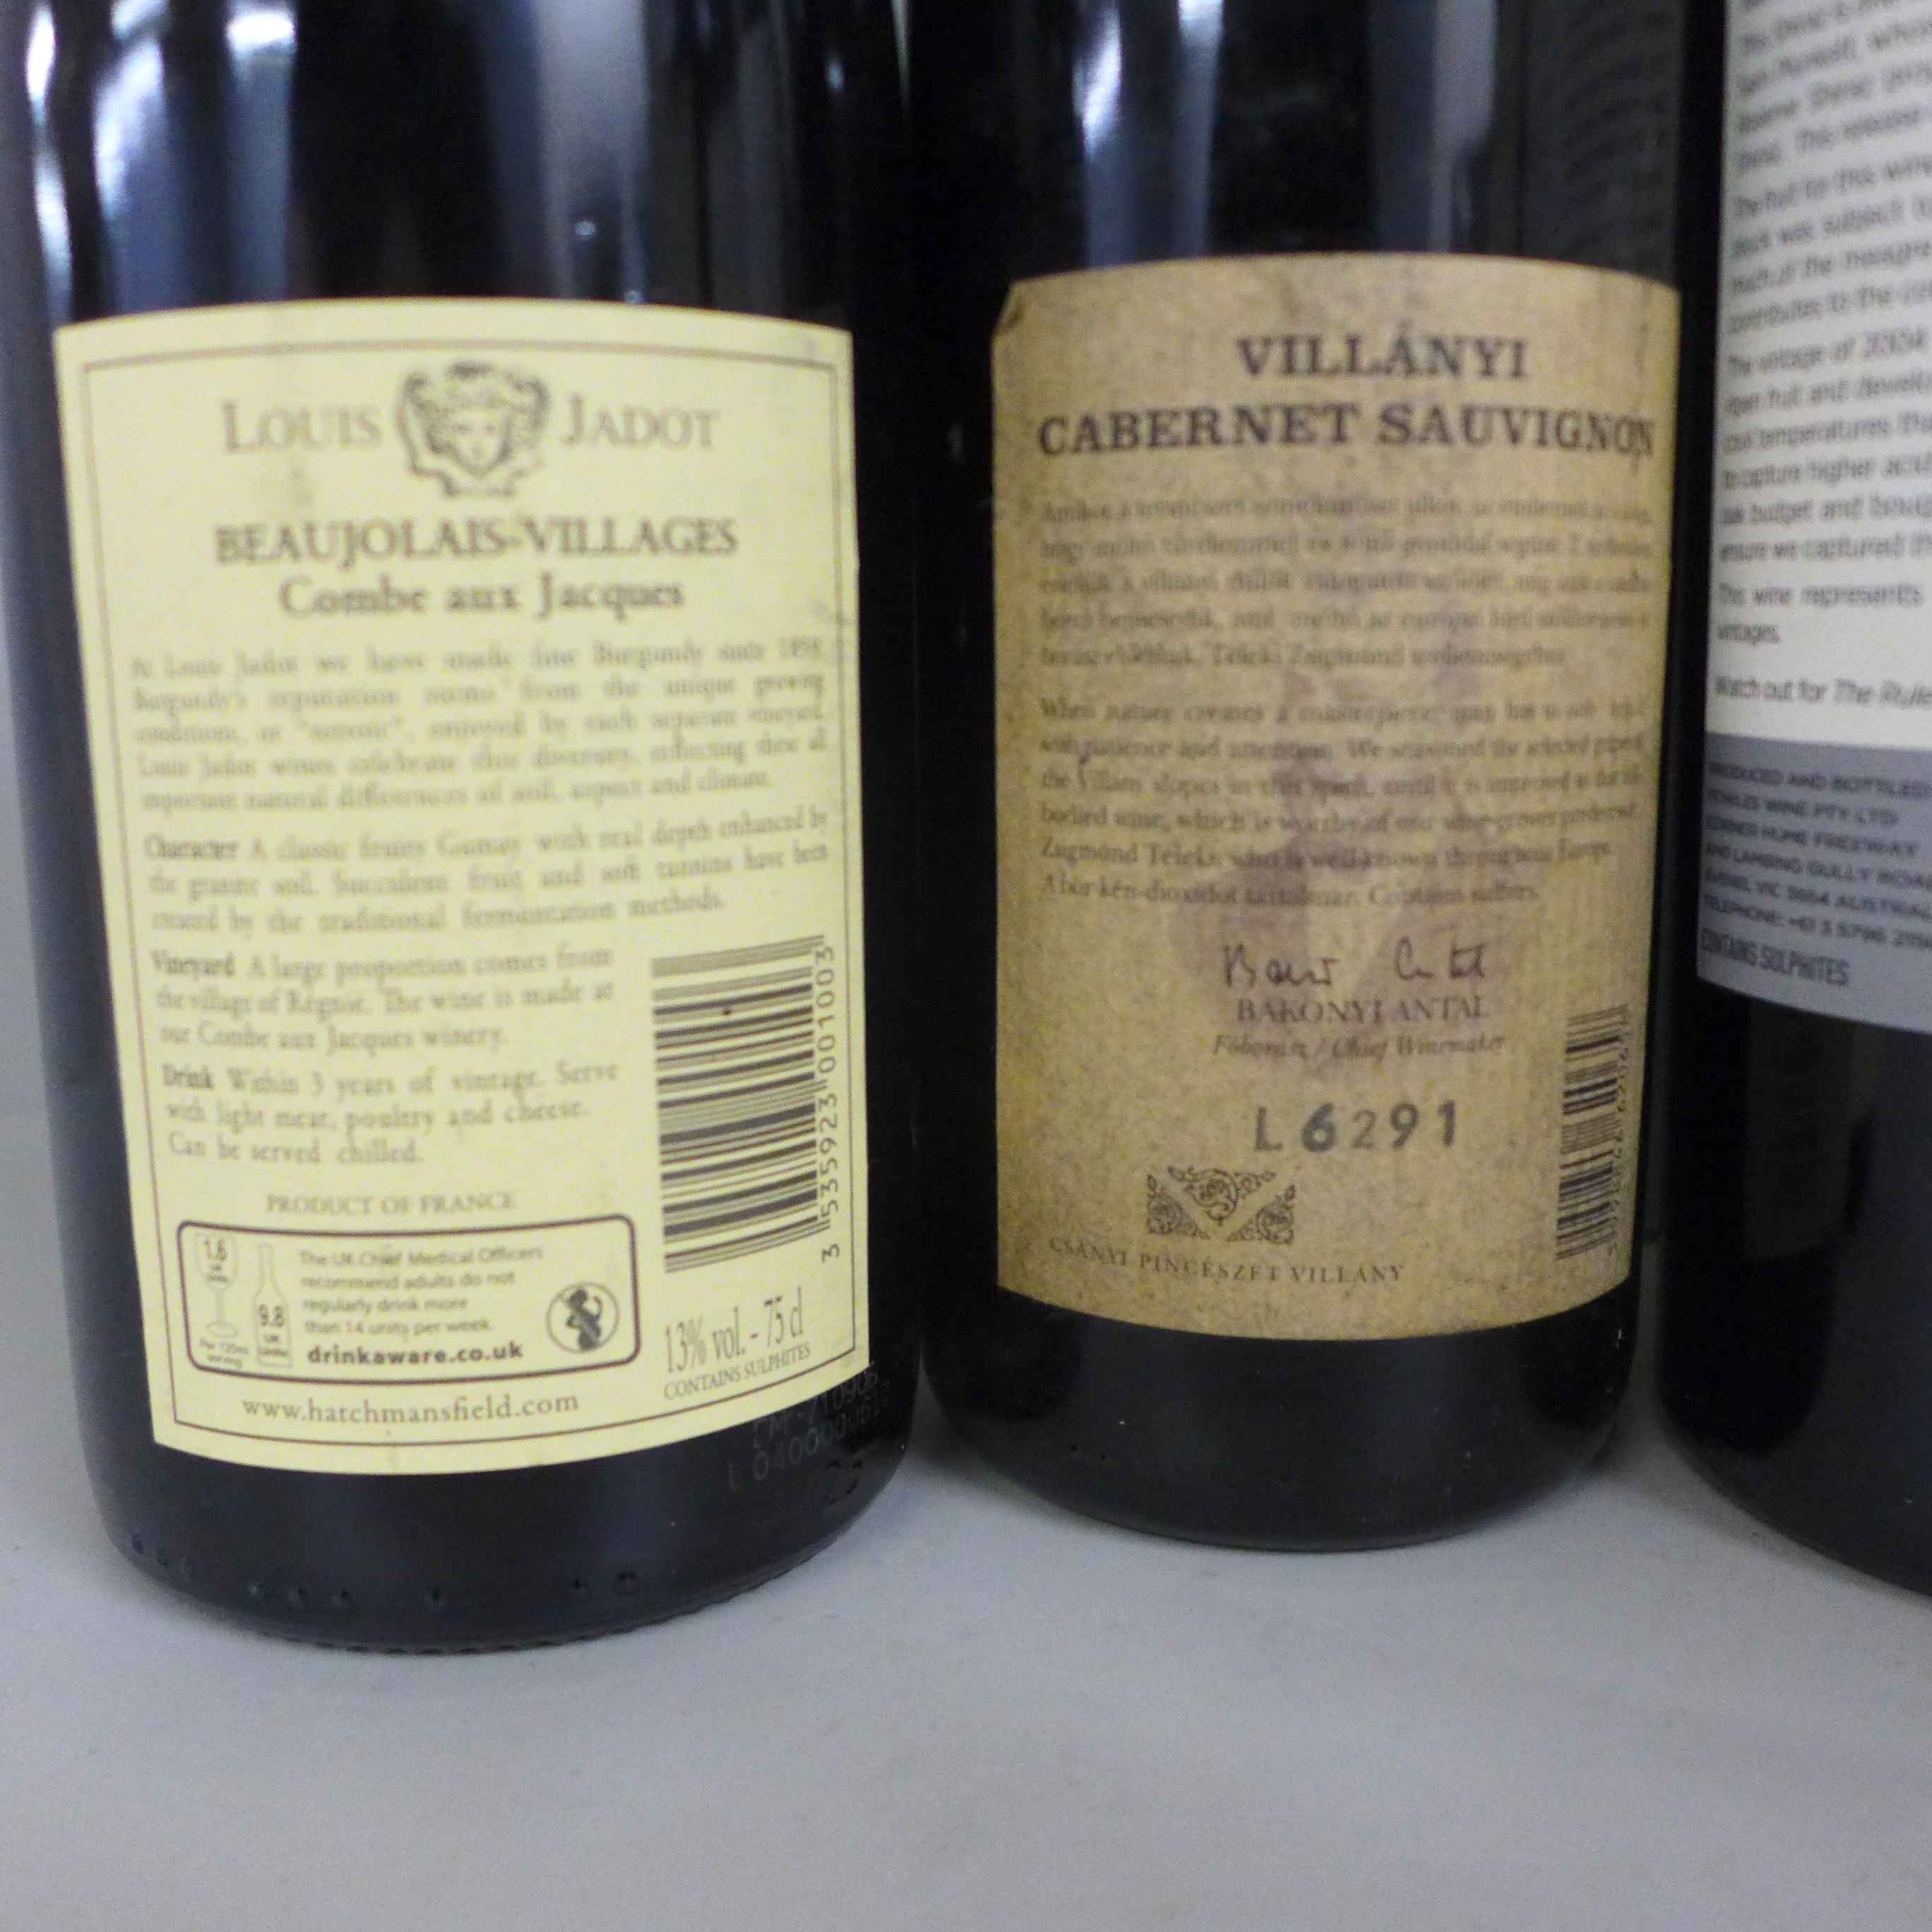 Five bottles of wine including Shiraz, Cabernet Sauvignon and Louis Jadot Beaujolais-Villages - Image 5 of 7